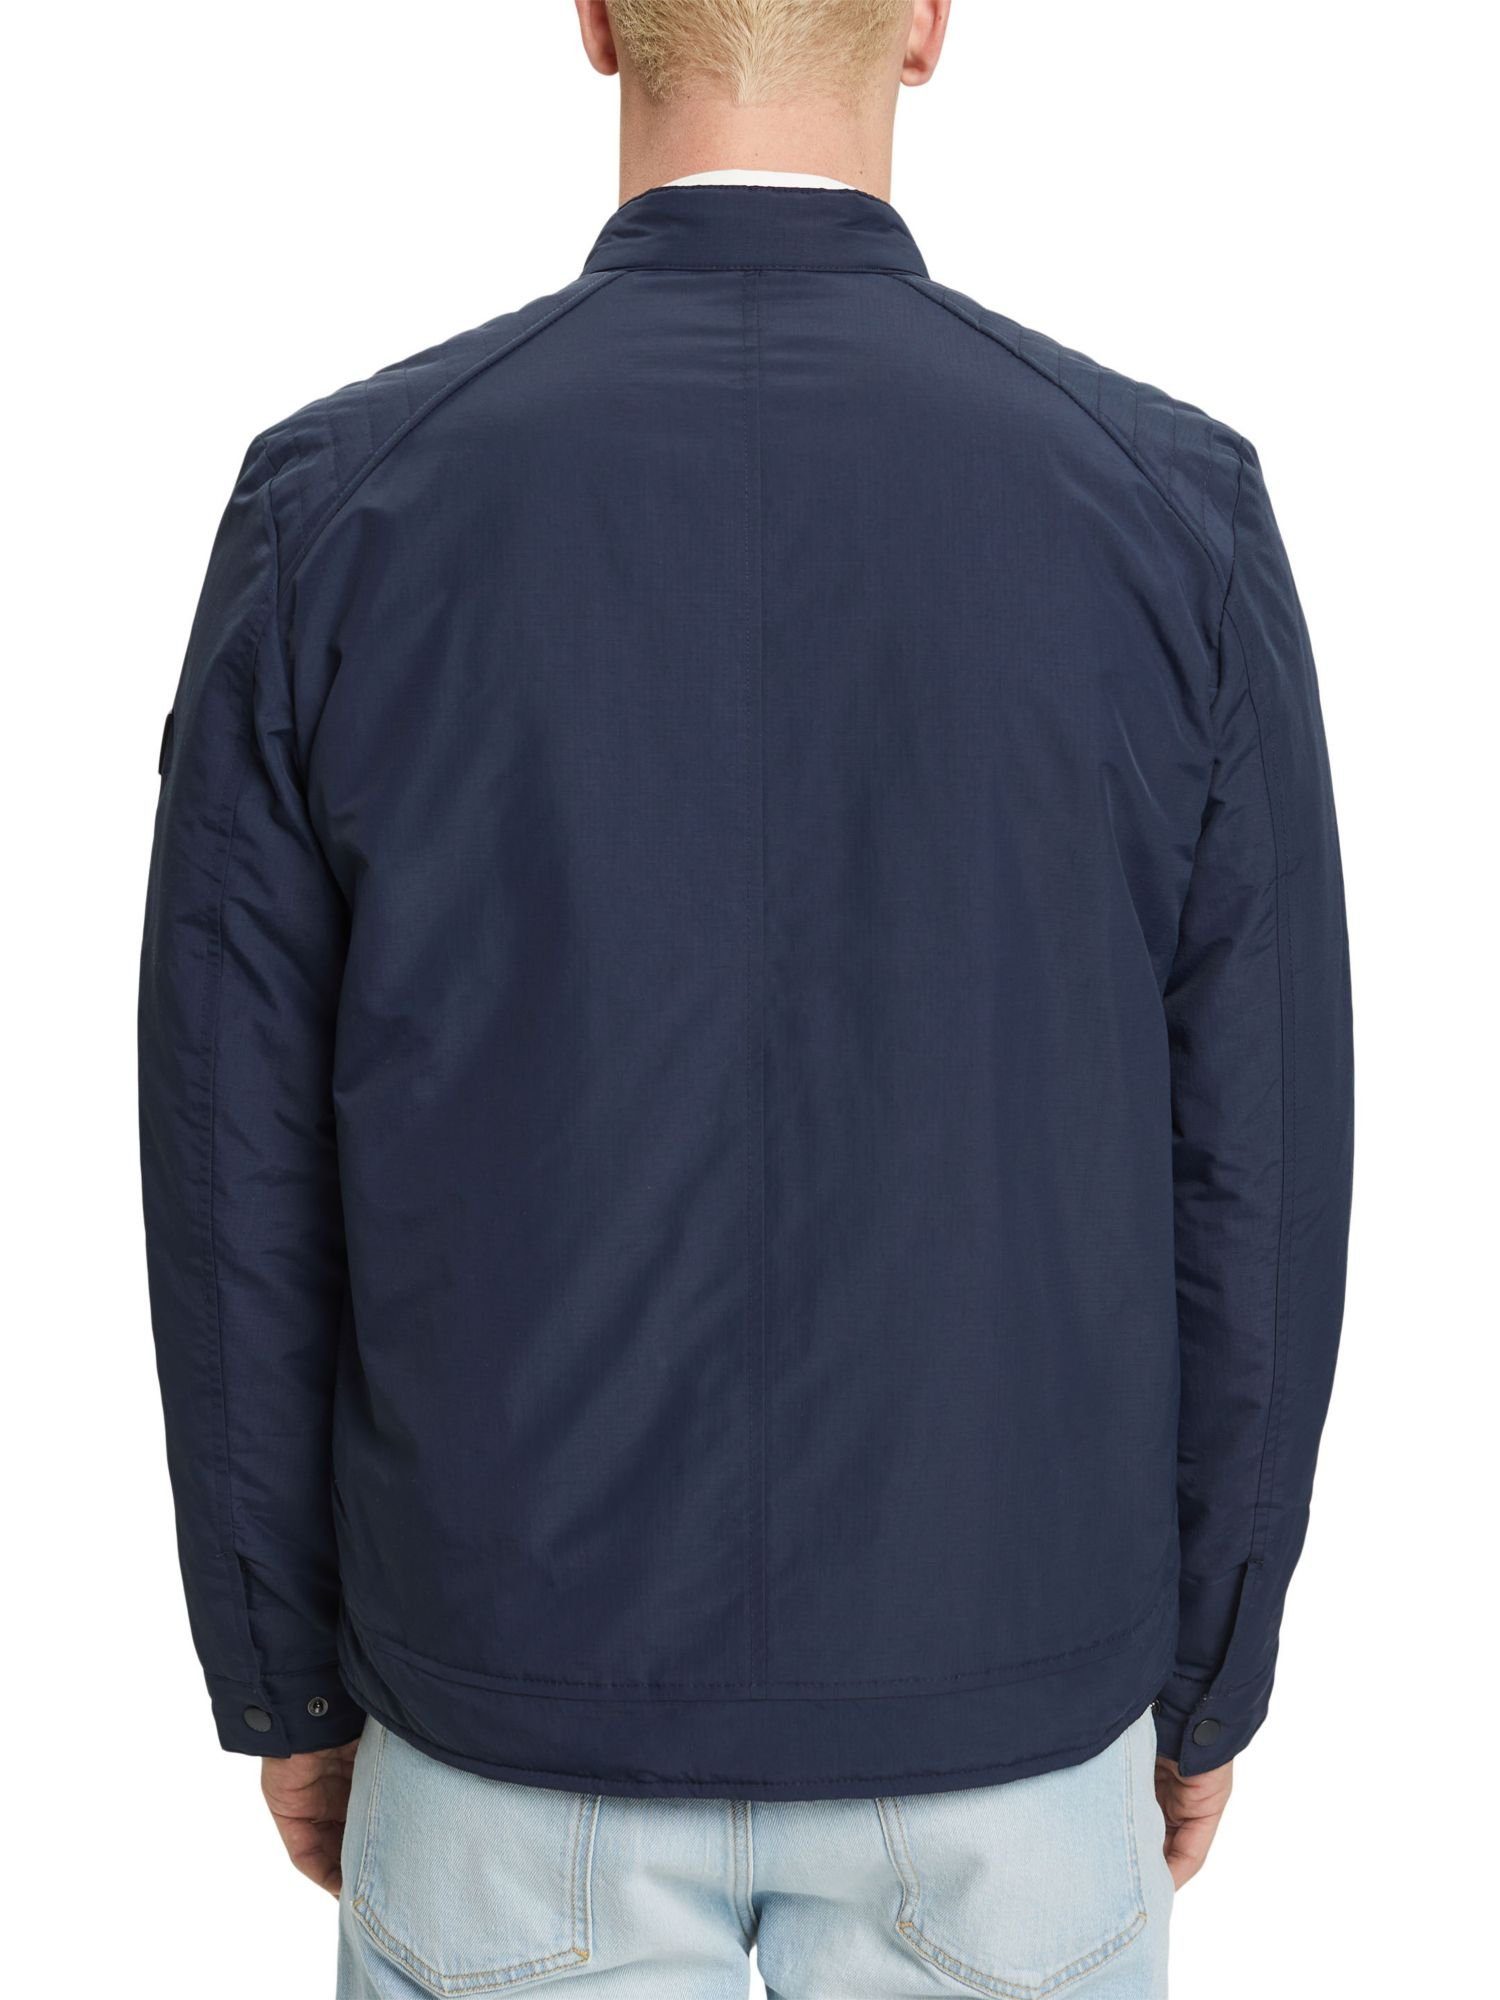 Regenjacke Ripstop-Jacke Esprit Wasserabweisende NAVY